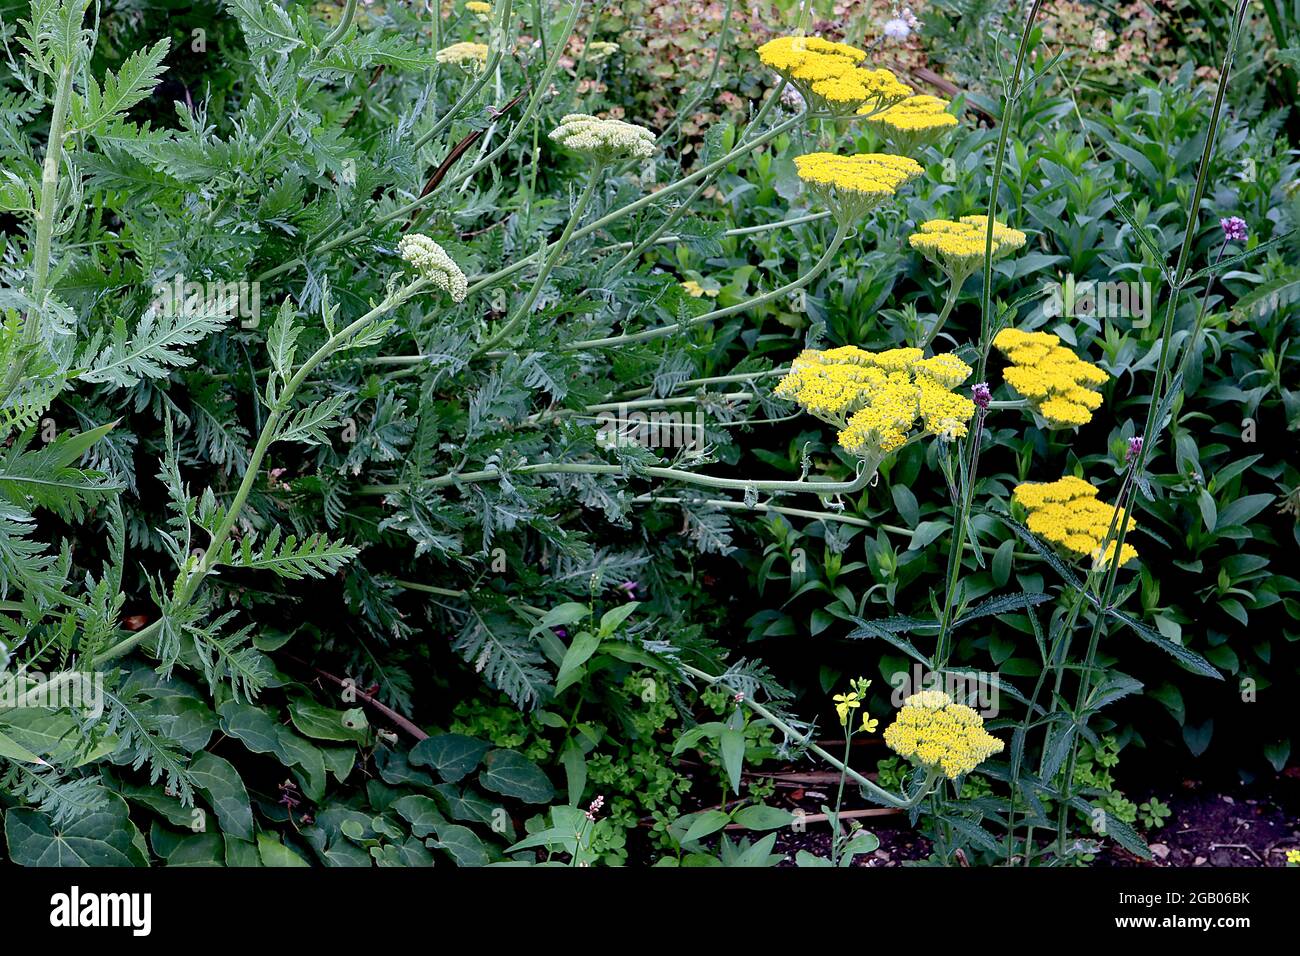 Achillea millefolium ‘Coronation Gold’ yarrow Coronation Gold – dense flat flower heads of tiny yellow flowers and ferny grey green leaves,  June, UK Stock Photo